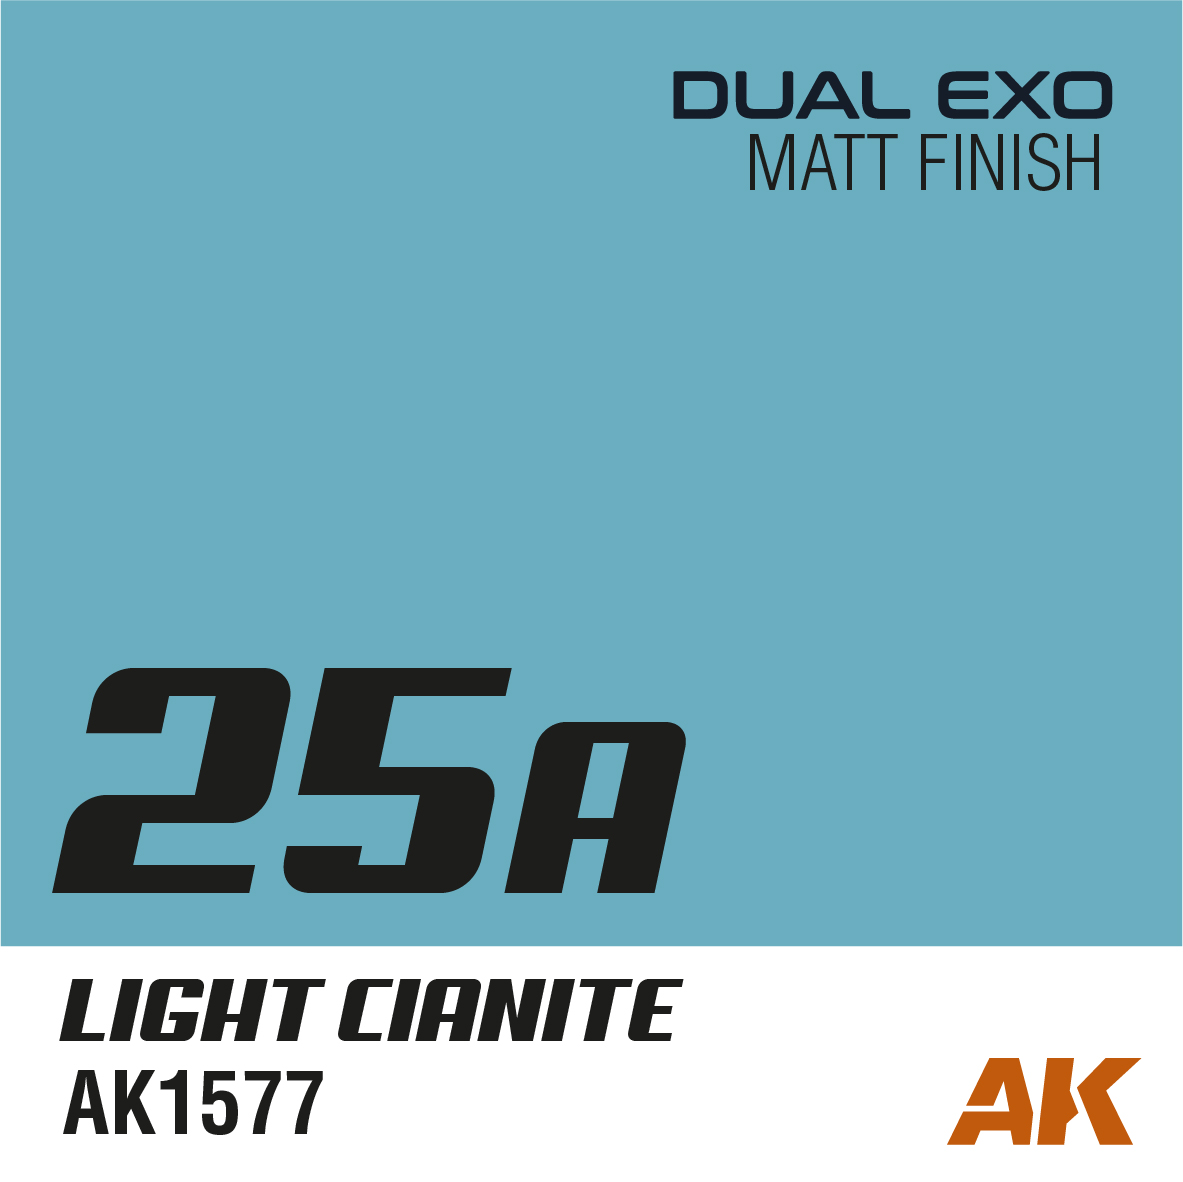 Dual Exo Scenery 25A - Light Cianite